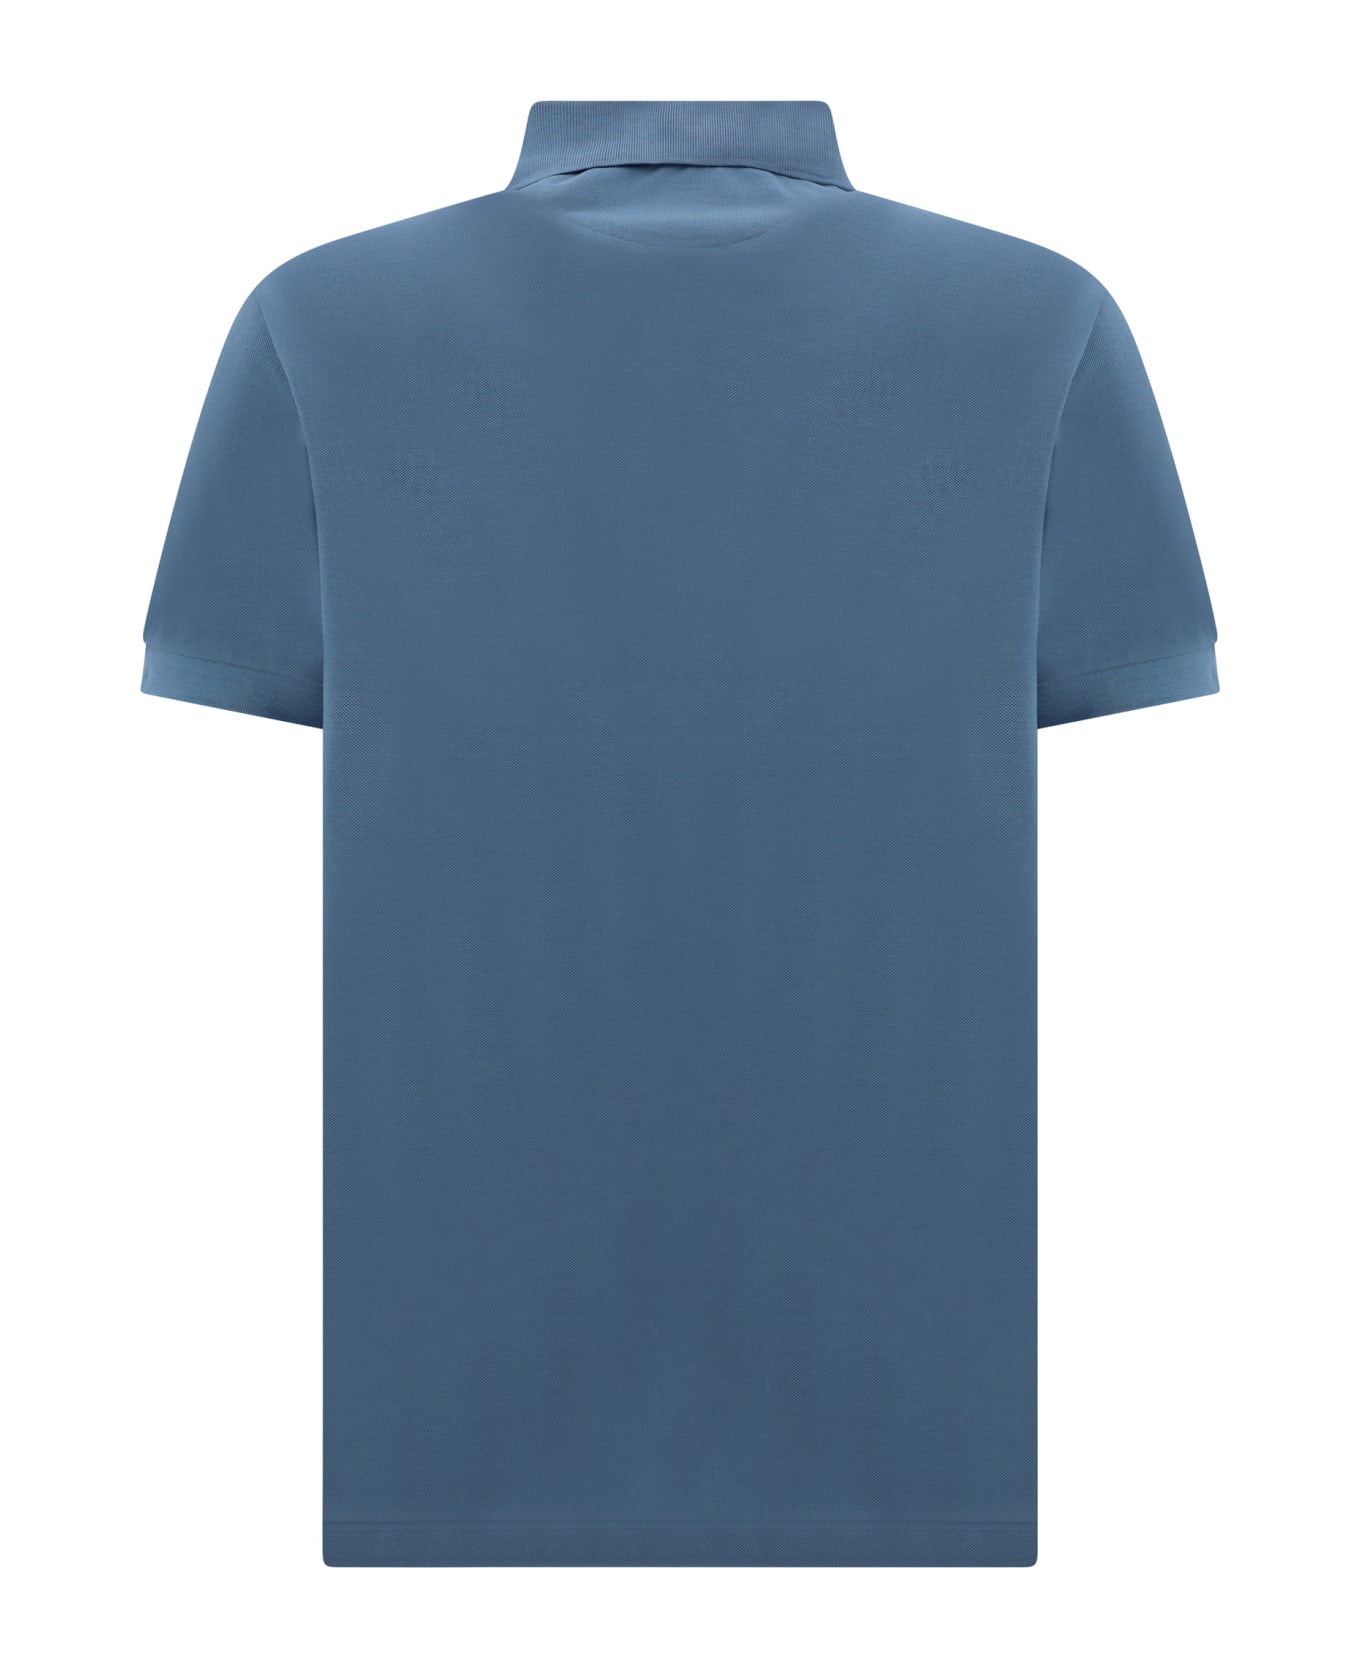 Paul Smith Polo Shirt - Azzurro